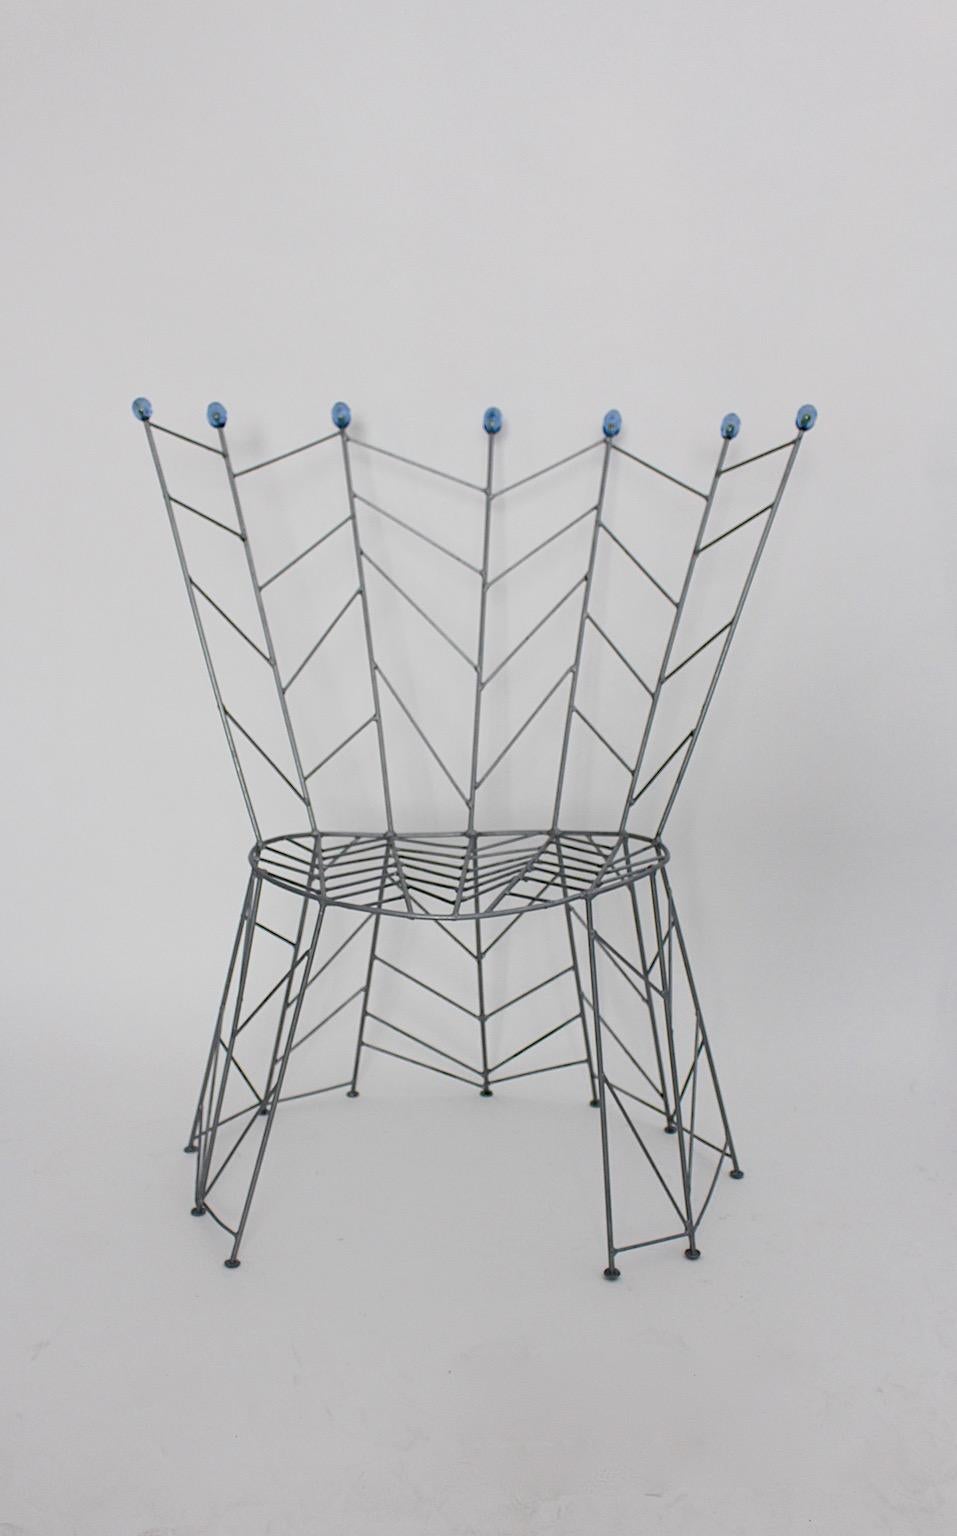 Lacquered Sculptural Organic Vintage Side Chairs Pair Bohuslav Horak 1988 Czech Republic For Sale